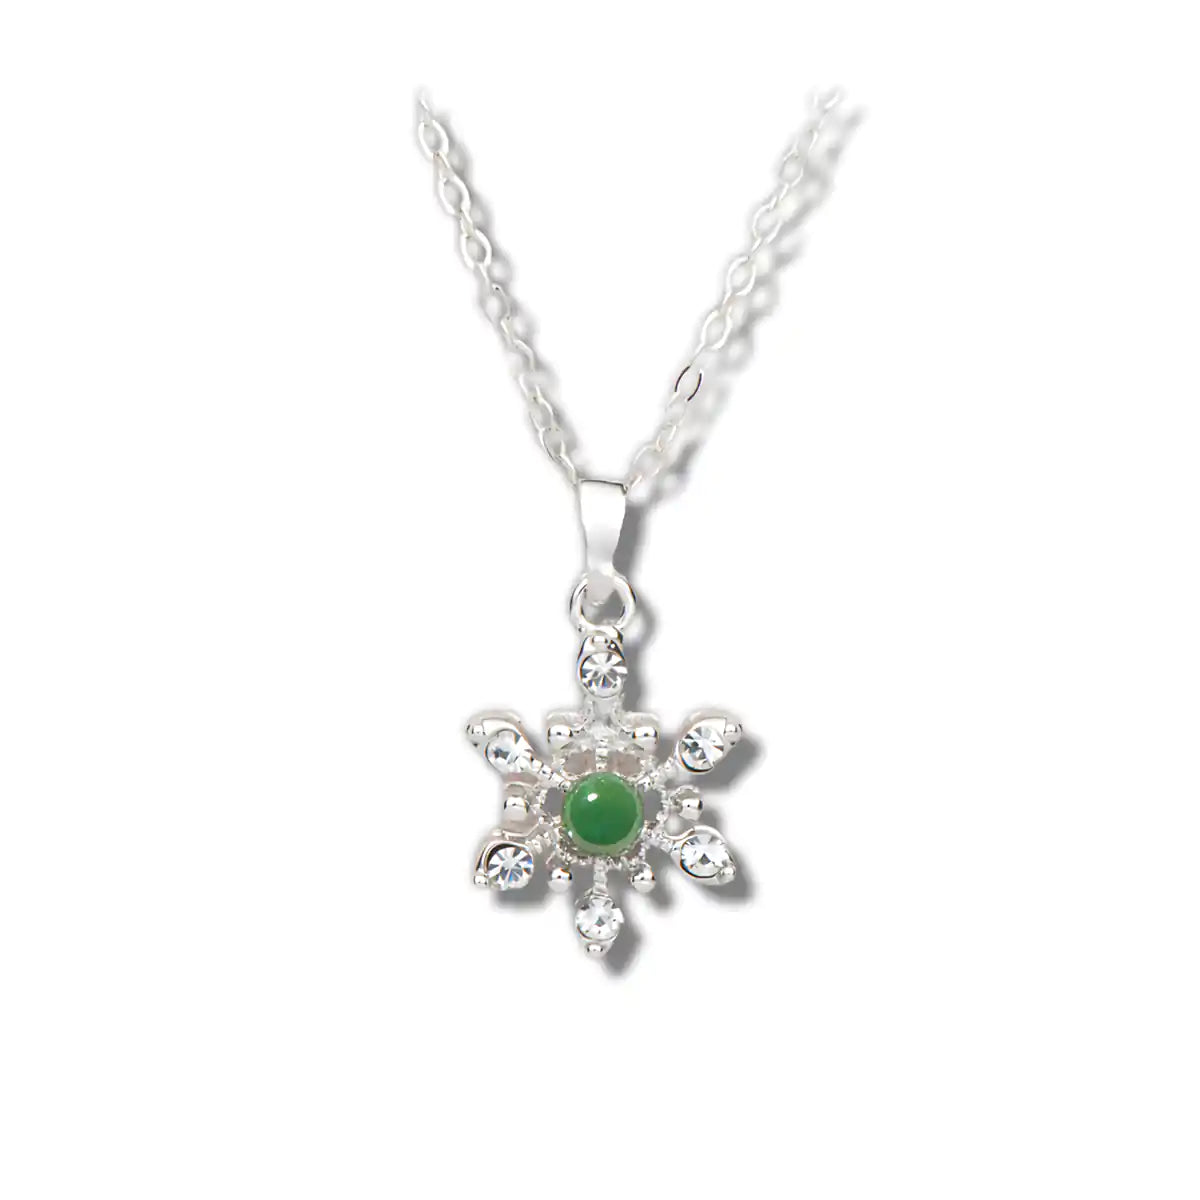 Jade dainty snowflake necklace